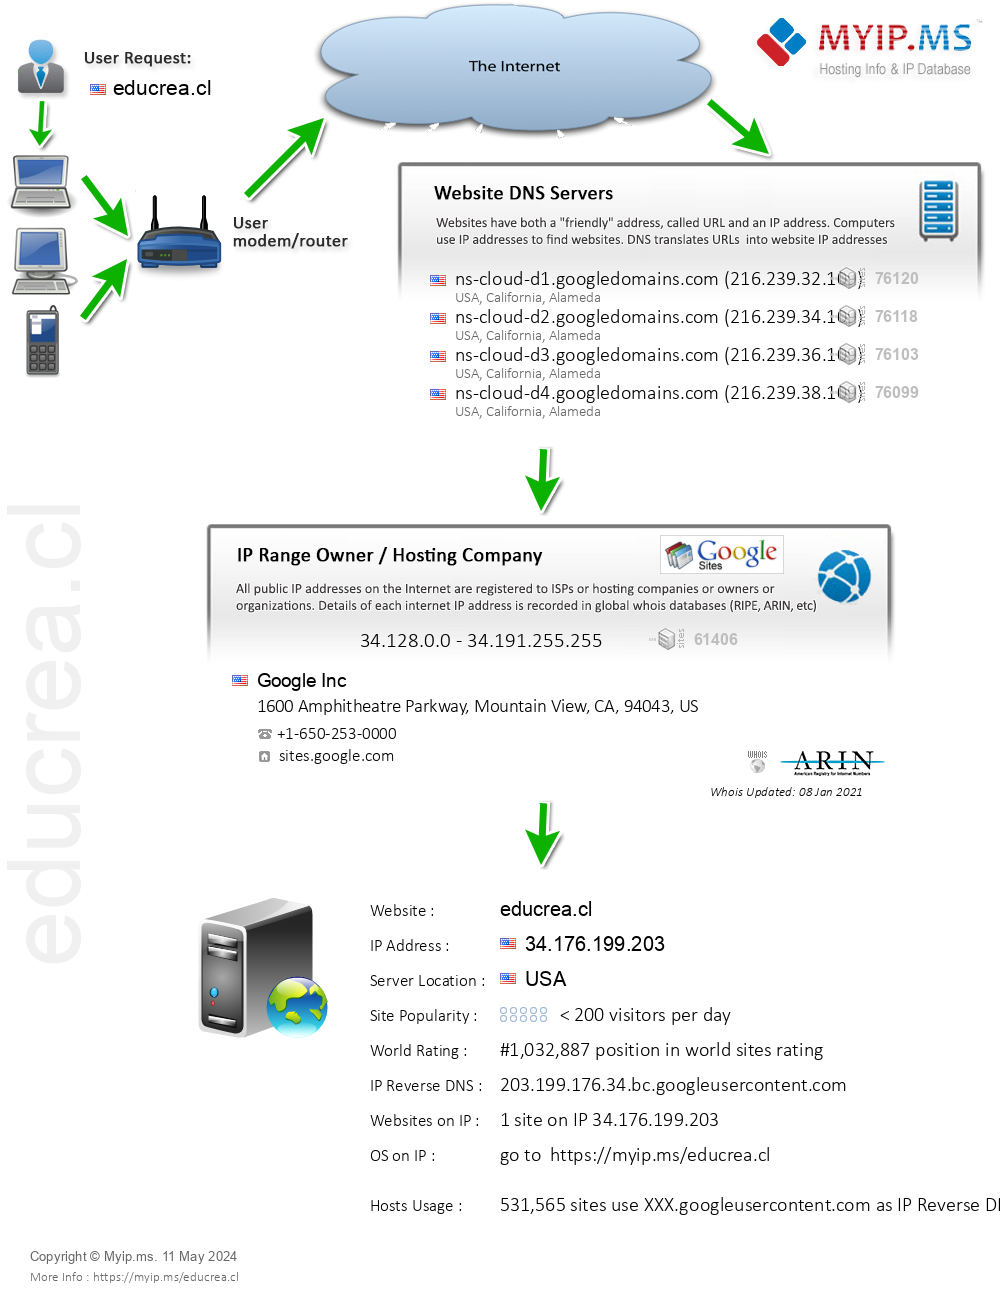 Educrea.cl - Website Hosting Visual IP Diagram